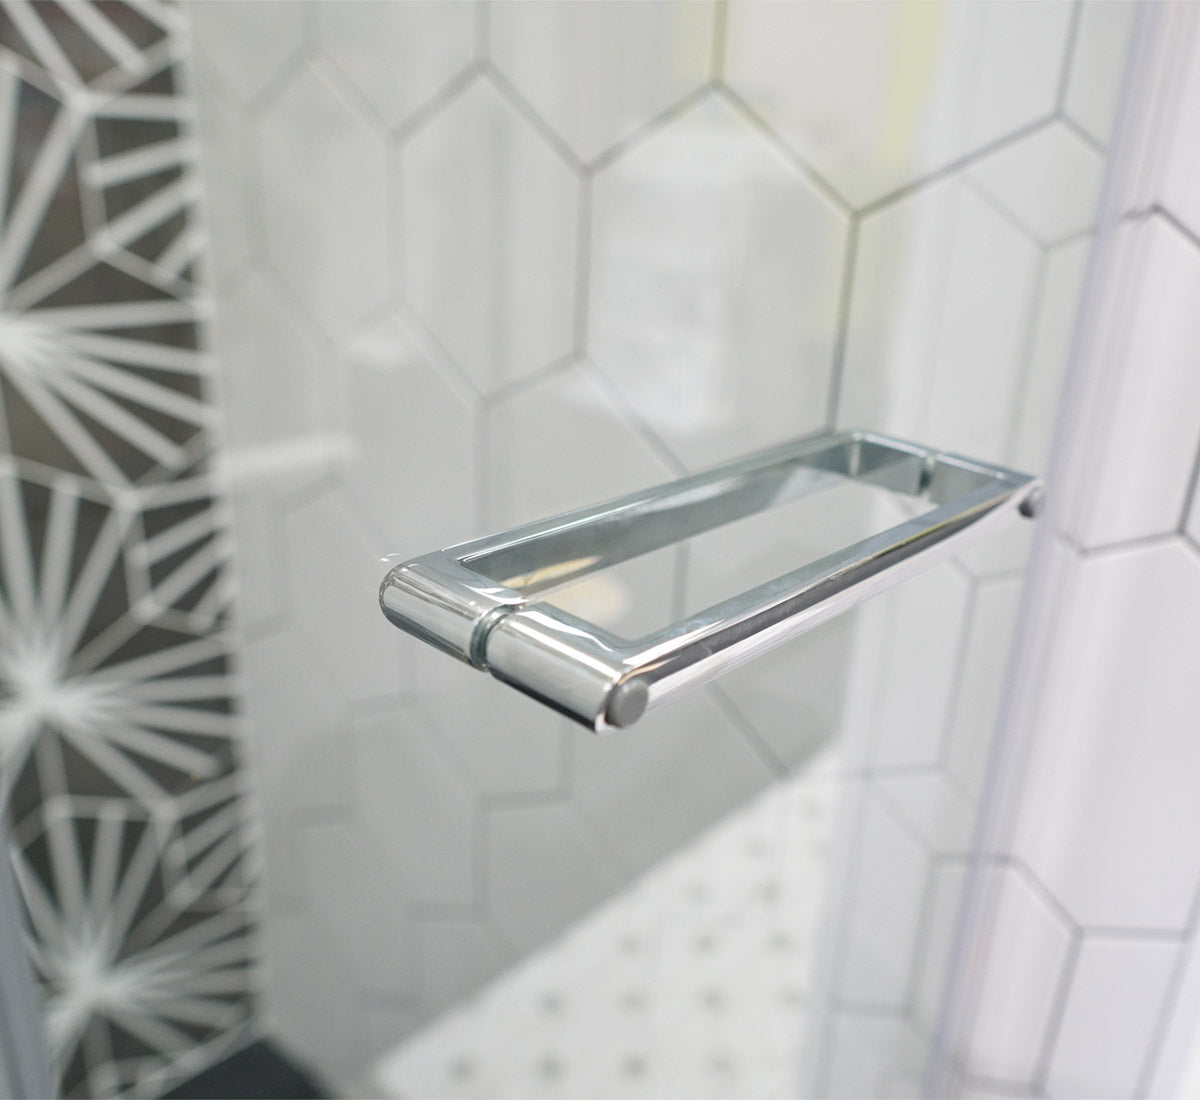 Merlyn 8 Series Frameless Hinged Bi-Fold Shower Door With Side Panel